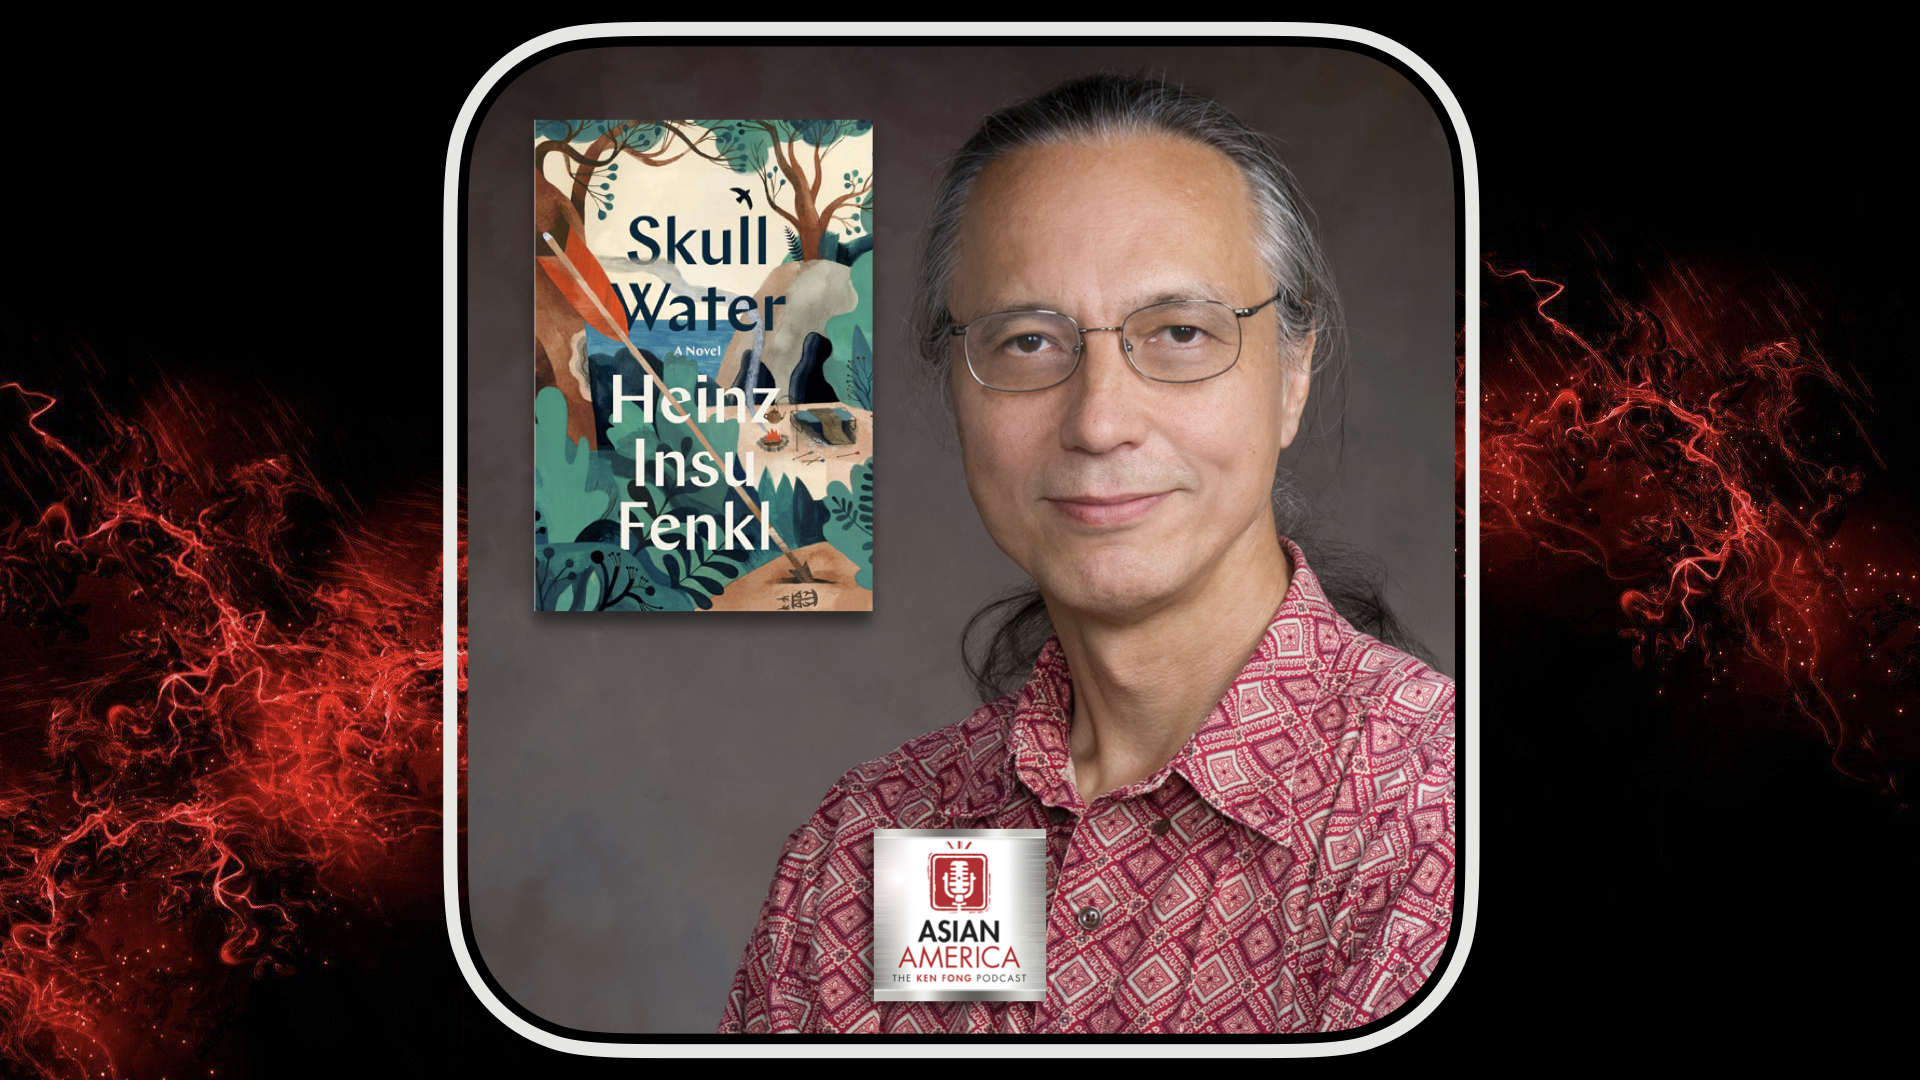 EP 422: Heinz Insu Fenkl On Skull Water An Autobiographical Novel